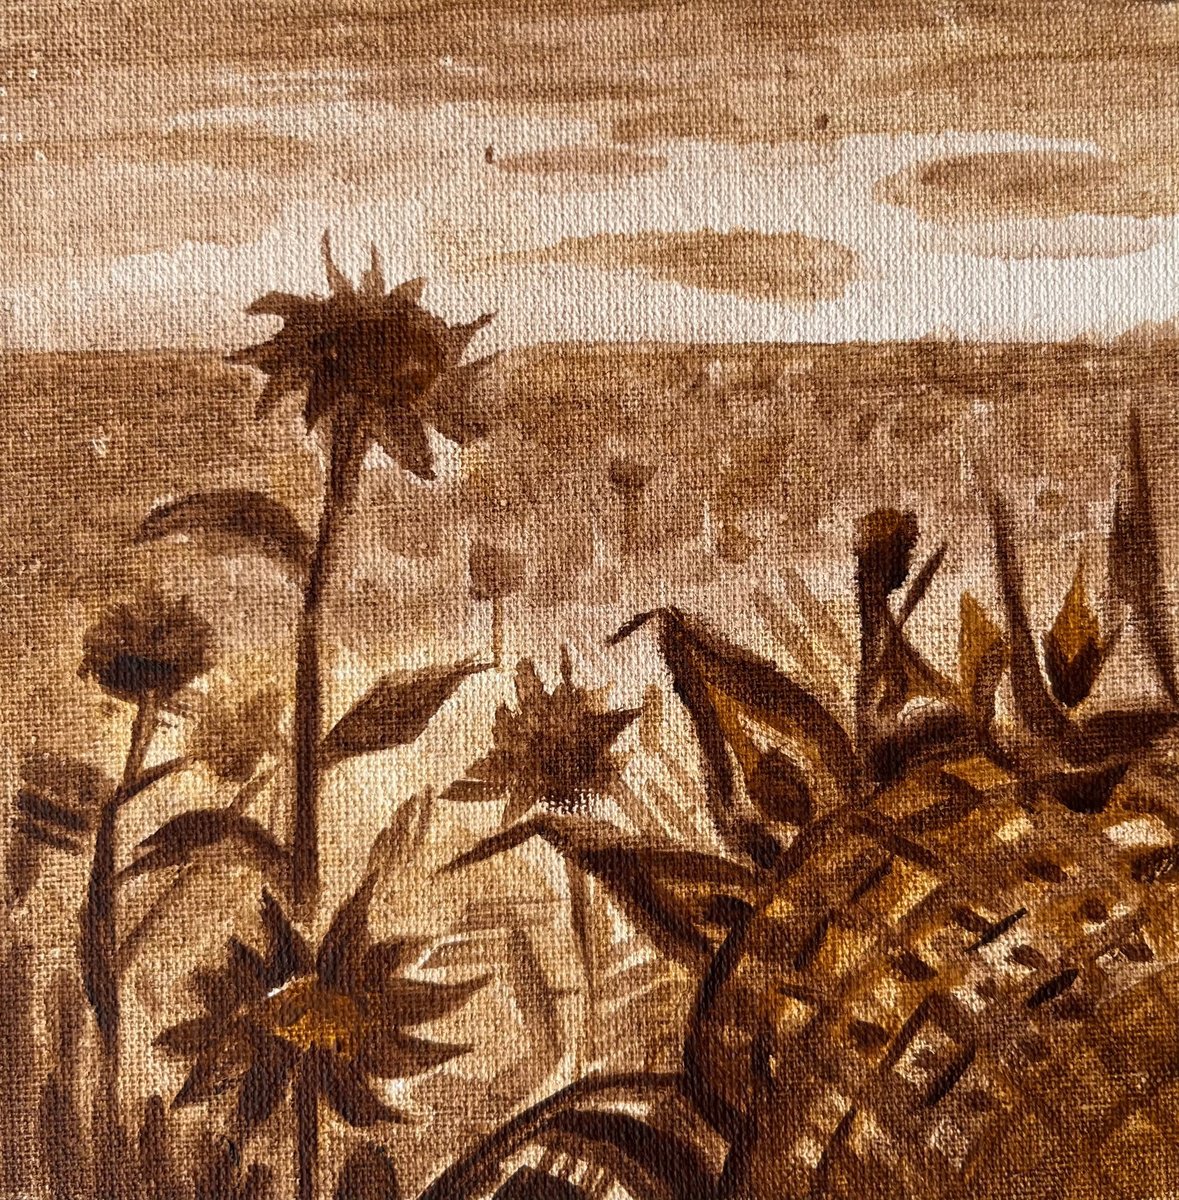 The Sunflower from Ukraine by Roman Sergienko